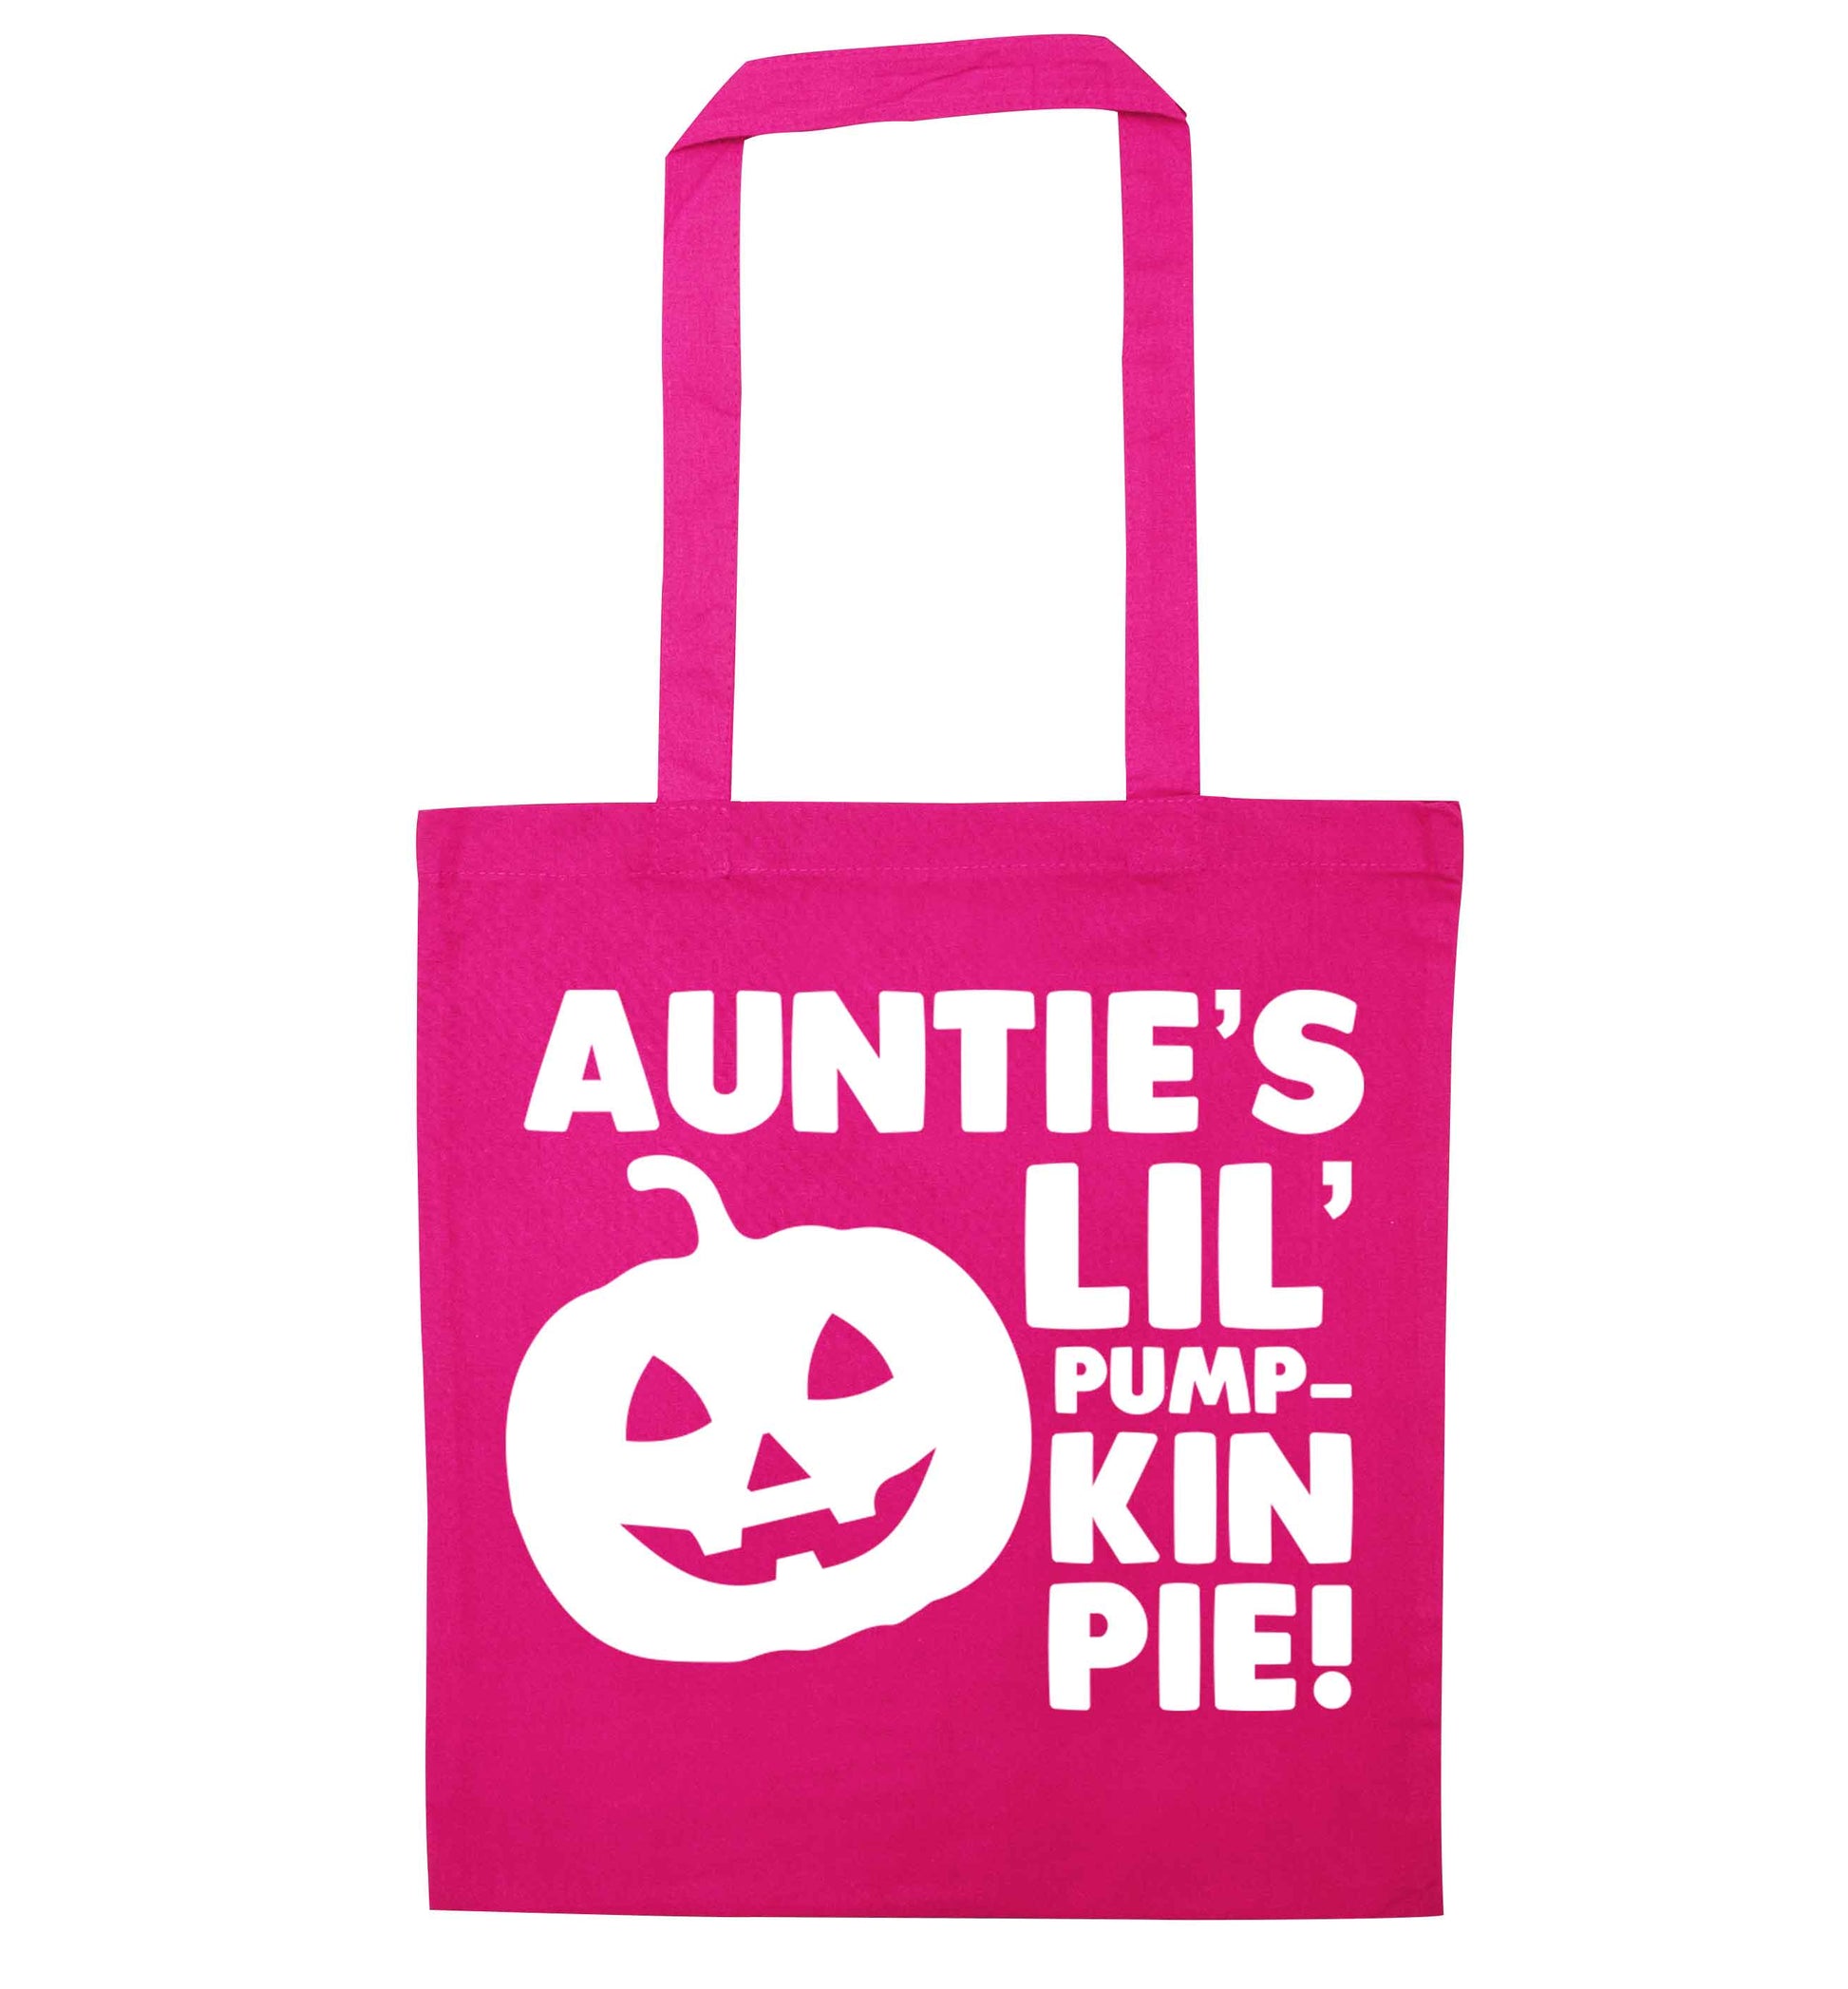 Auntie's lil' pumpkin pie pink tote bag